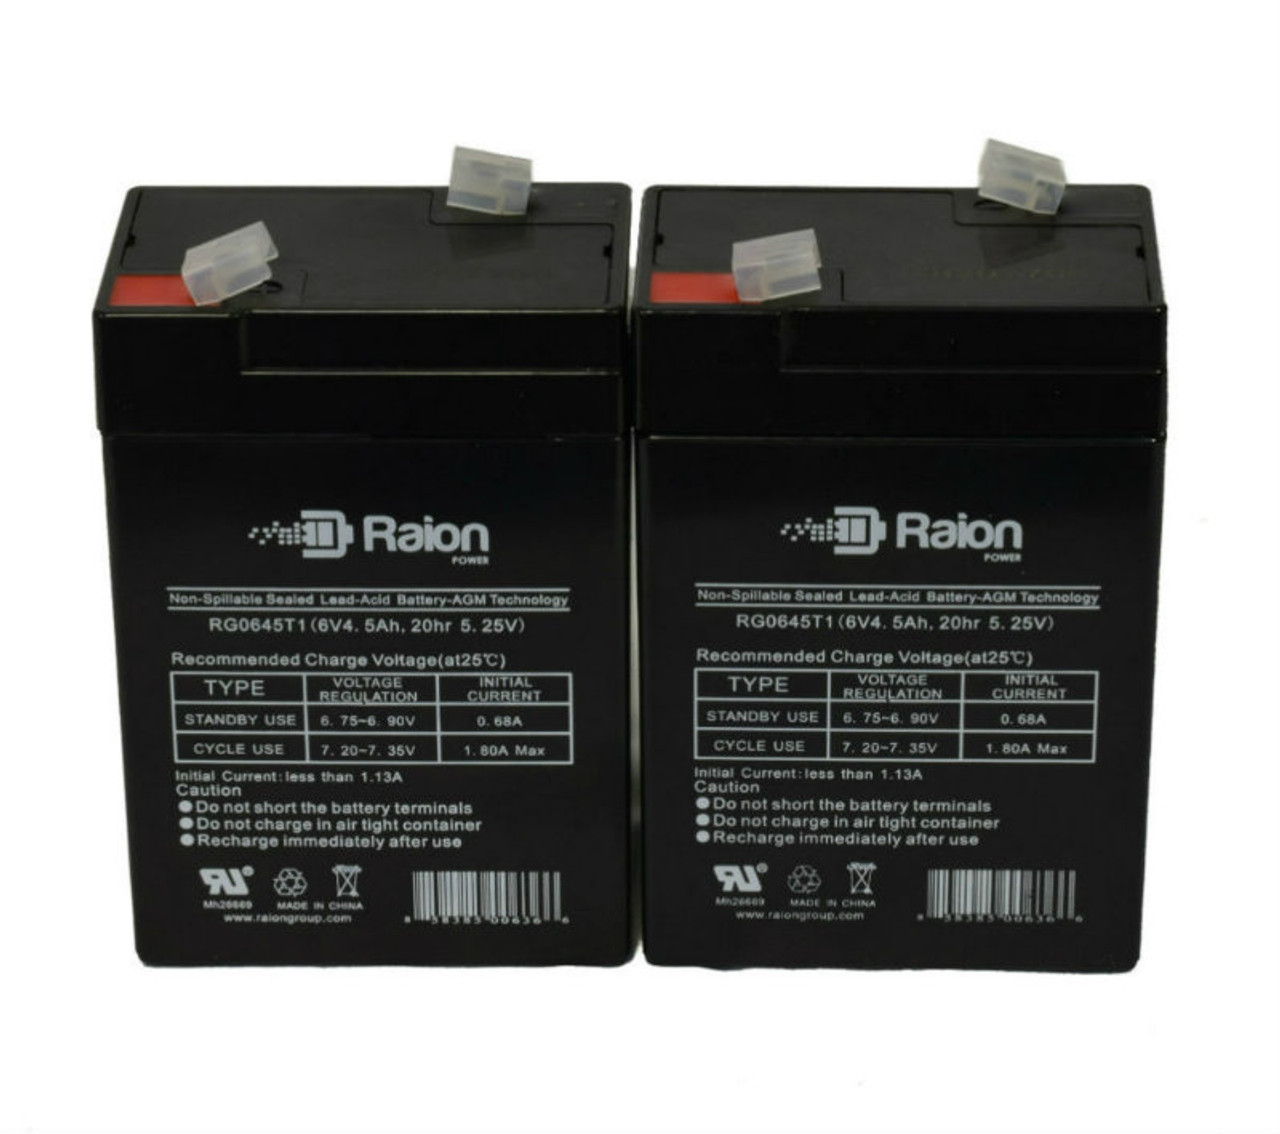 Raion Power 6V 4.5Ah Replacement Emergency Light Battery for Emergi-Lite CSM1 - 2 Pack